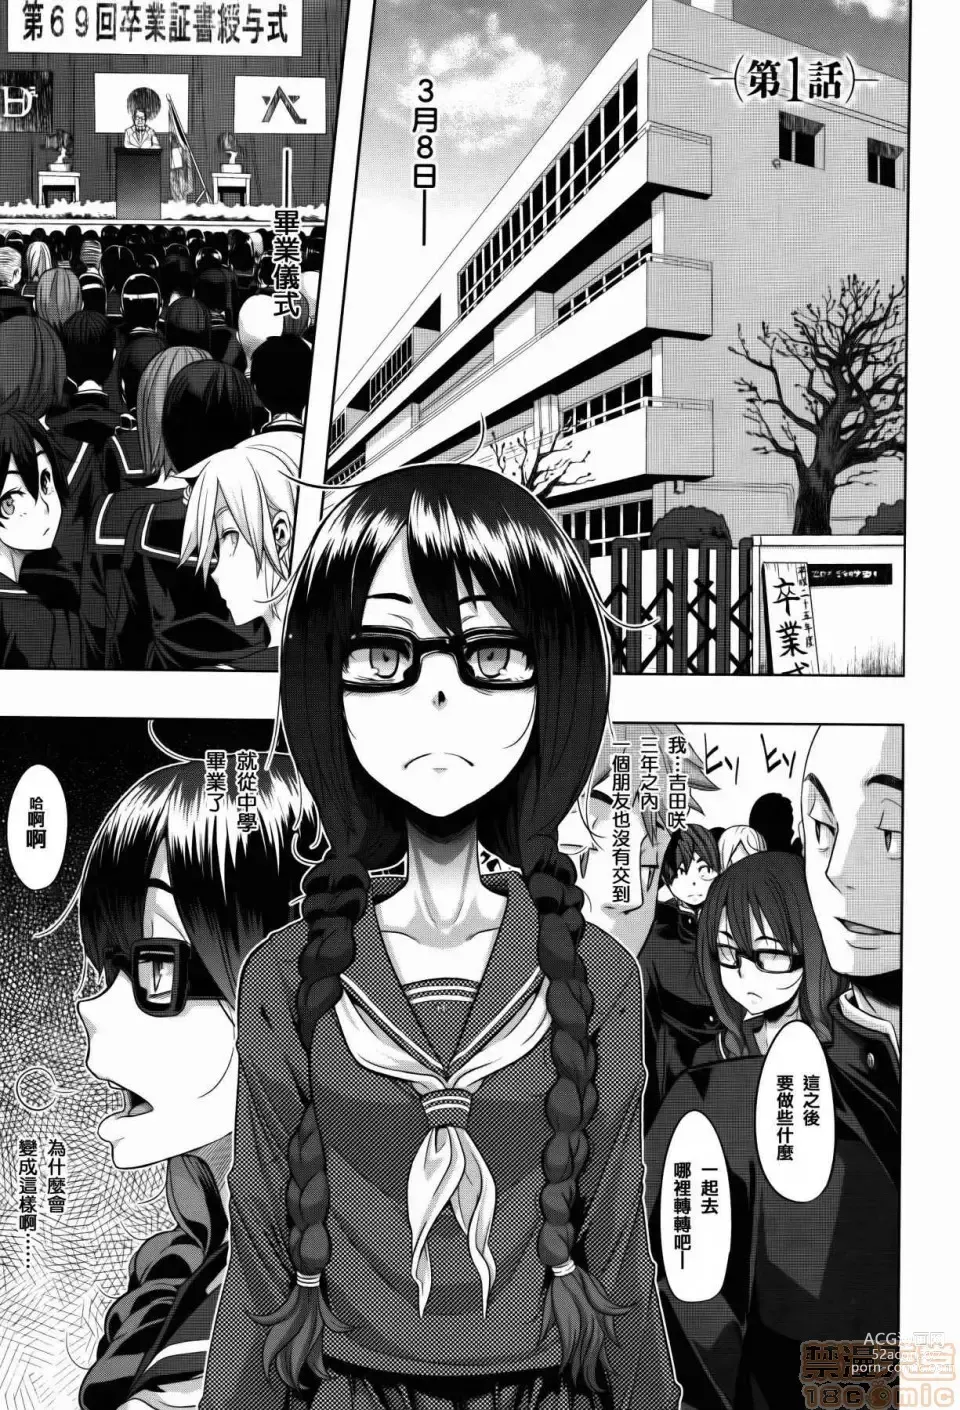 Page 7 of manga Henshin